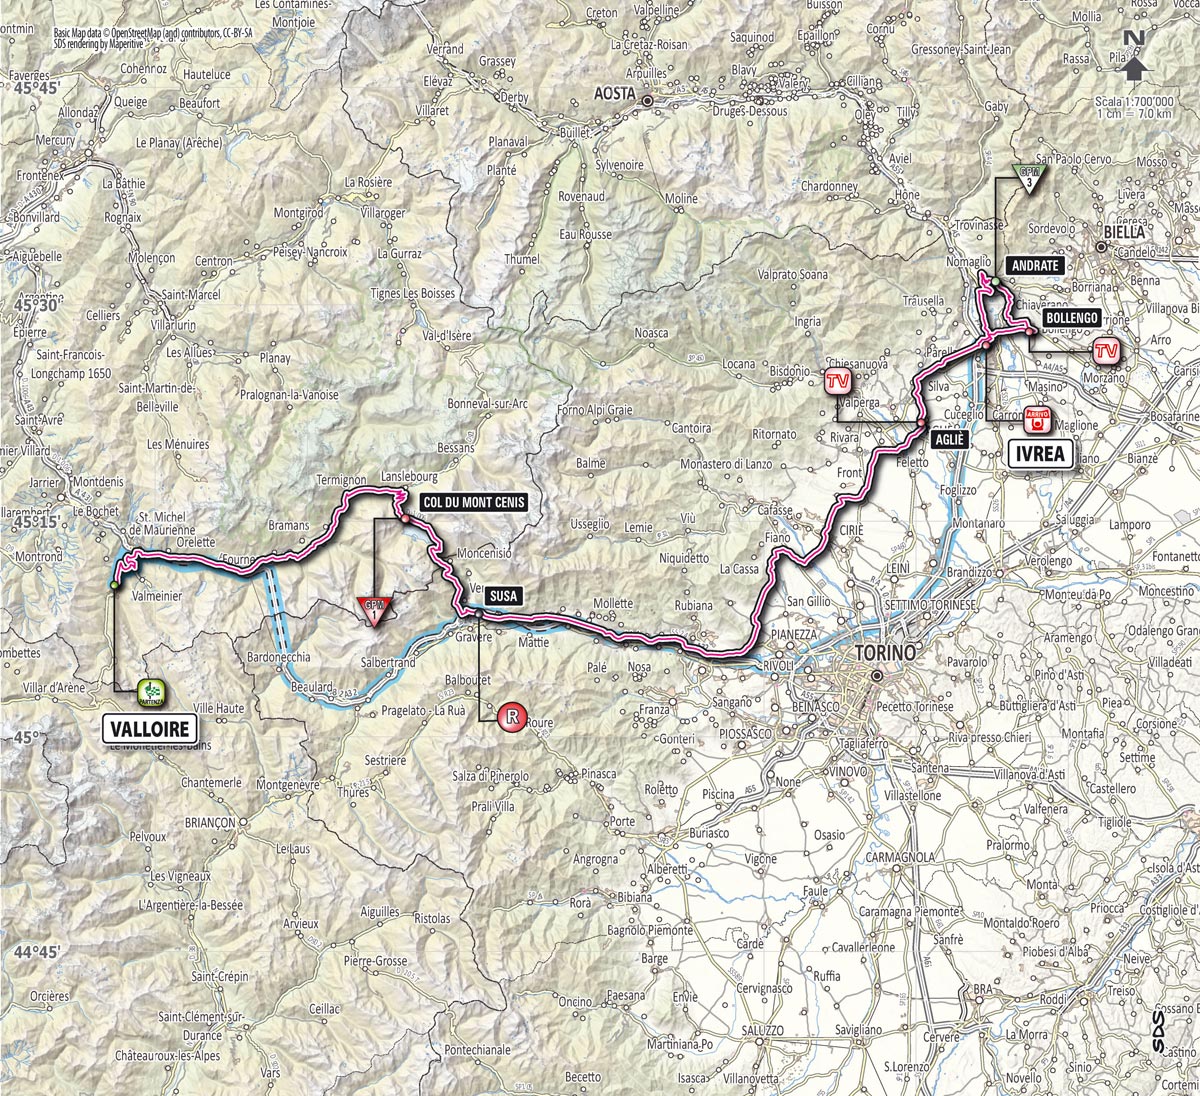 Giro d'Italia 2013 stage 16 map